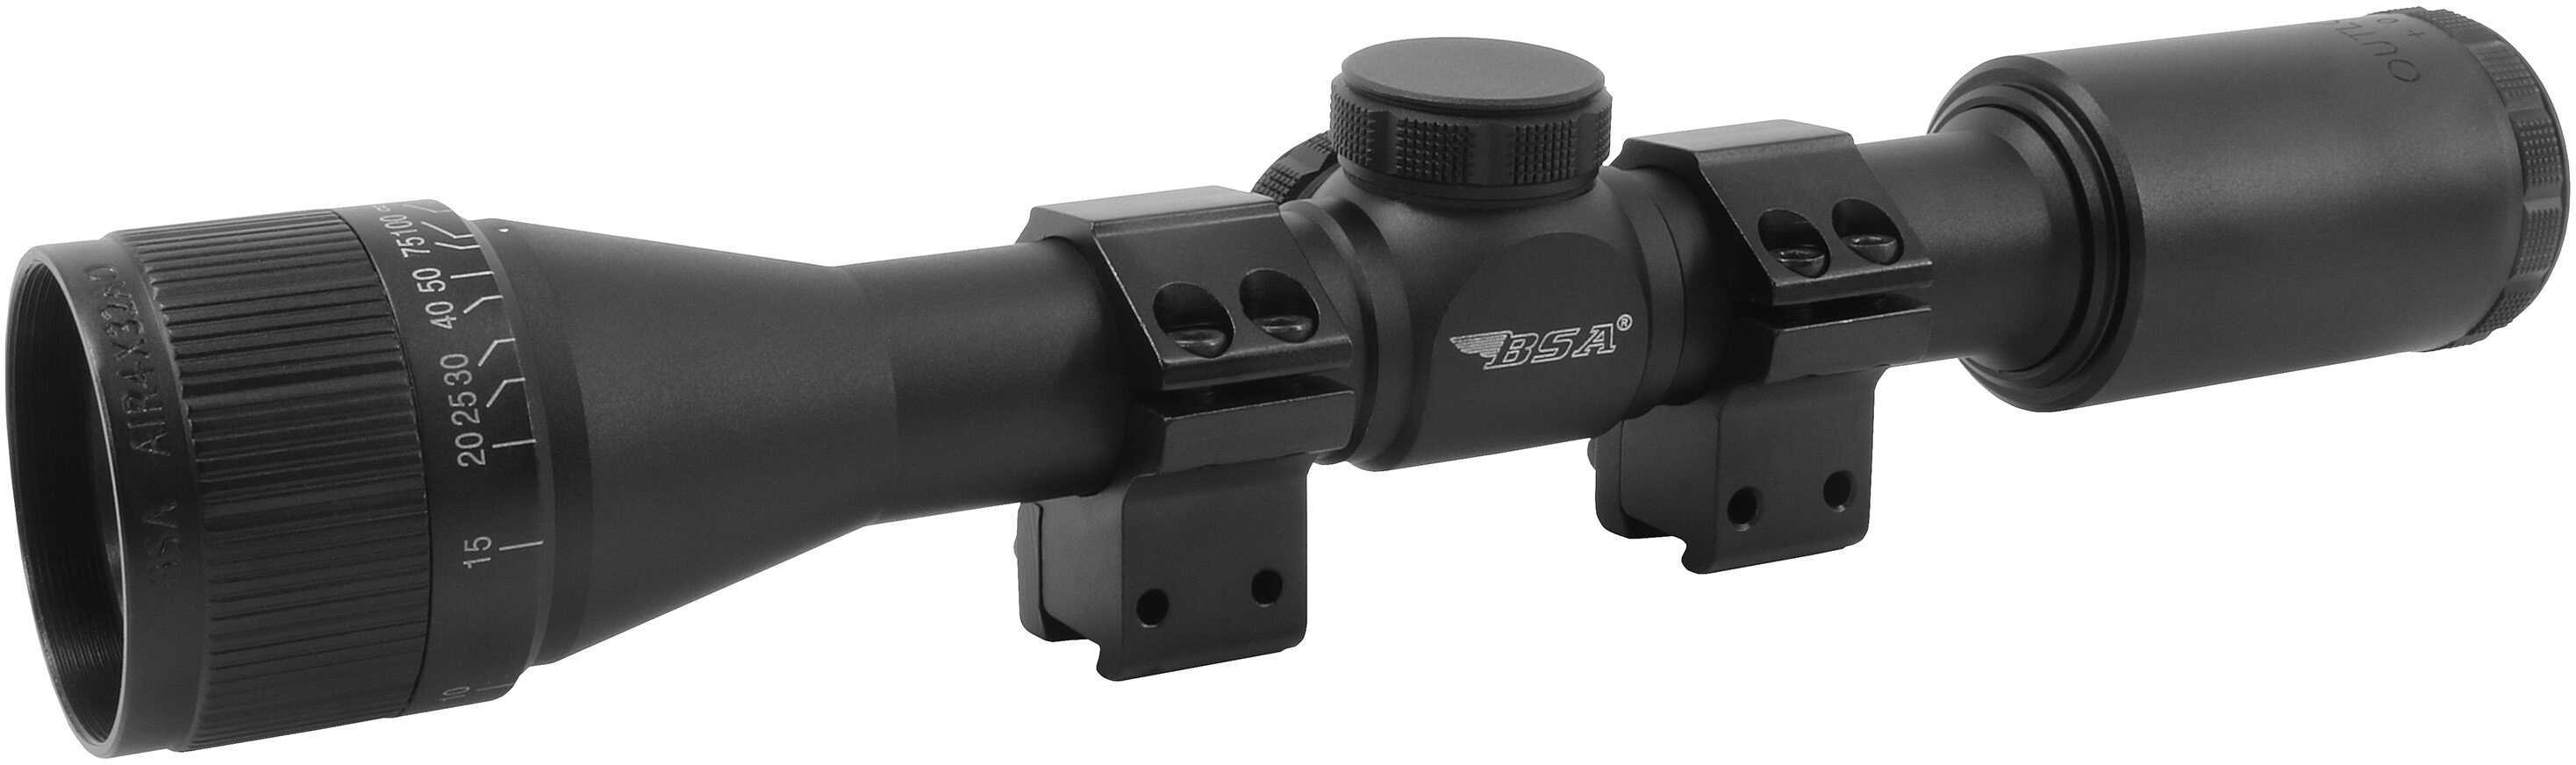 BSA Optics Outlook Rifle Scope 4X32mm Mil Dot Reticle 1" Main Tube 1/4 MOA Matte Finish Black AIR4X32AOTB